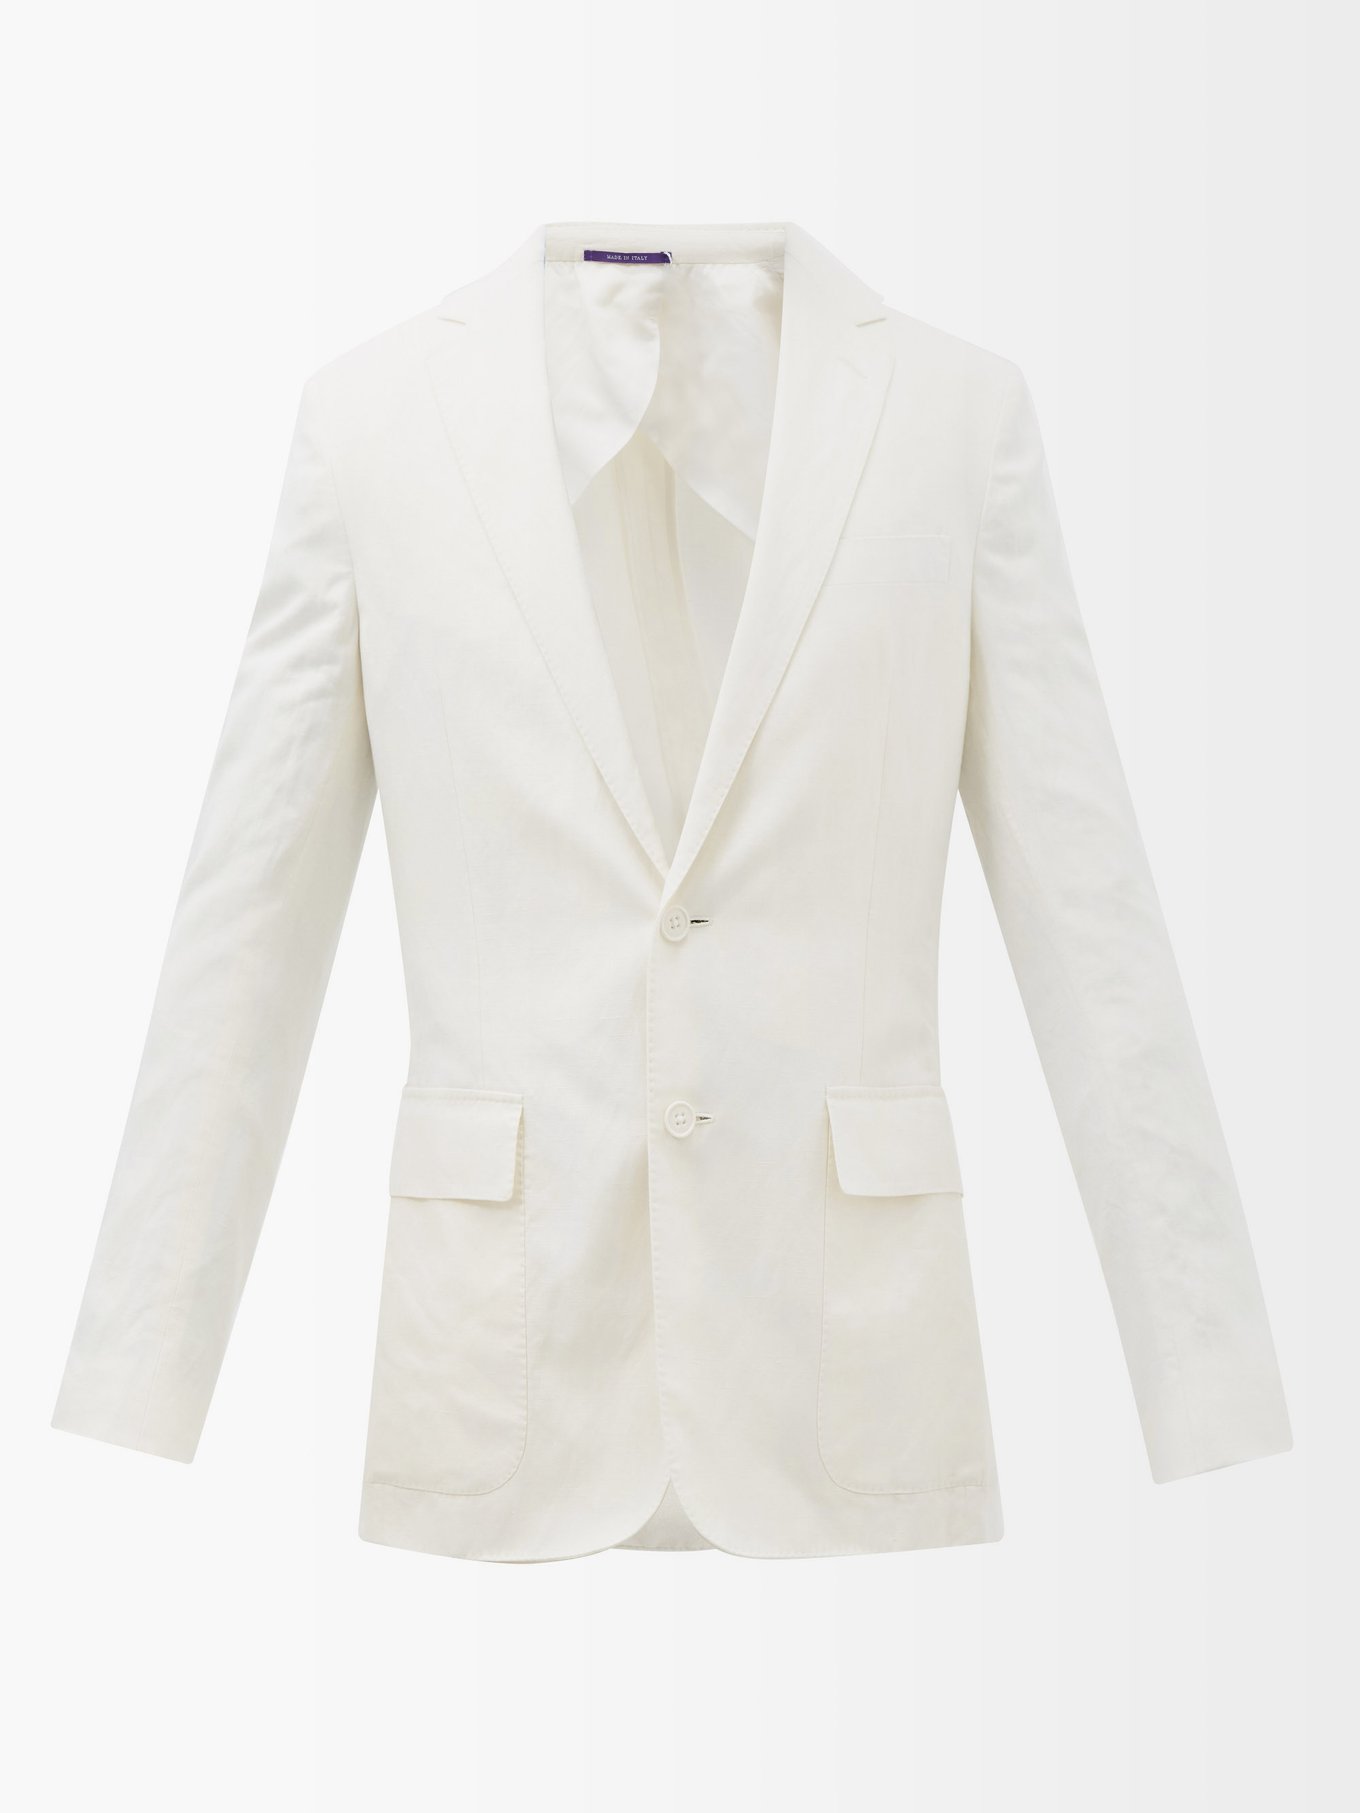 Dolce & Gabbana Men's Ivory One Button Blazer Size US 36 38 40 42 44